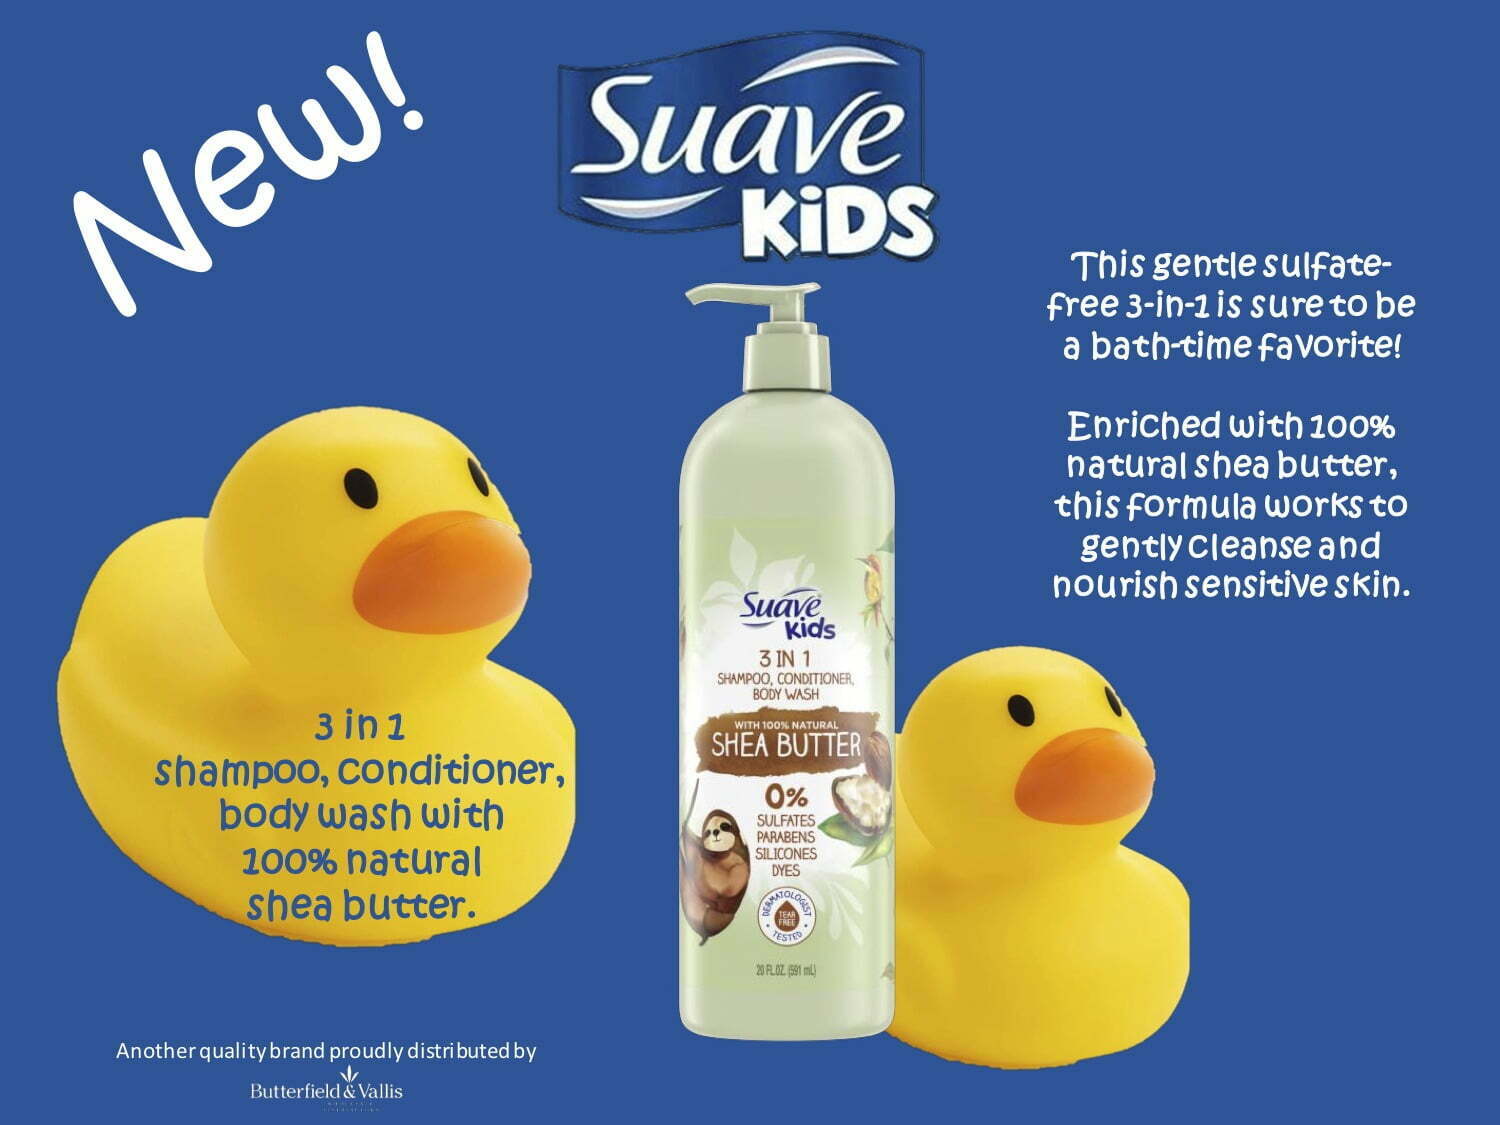 New Suave Kids 3 in 1 Shea Butter for Social Media copy